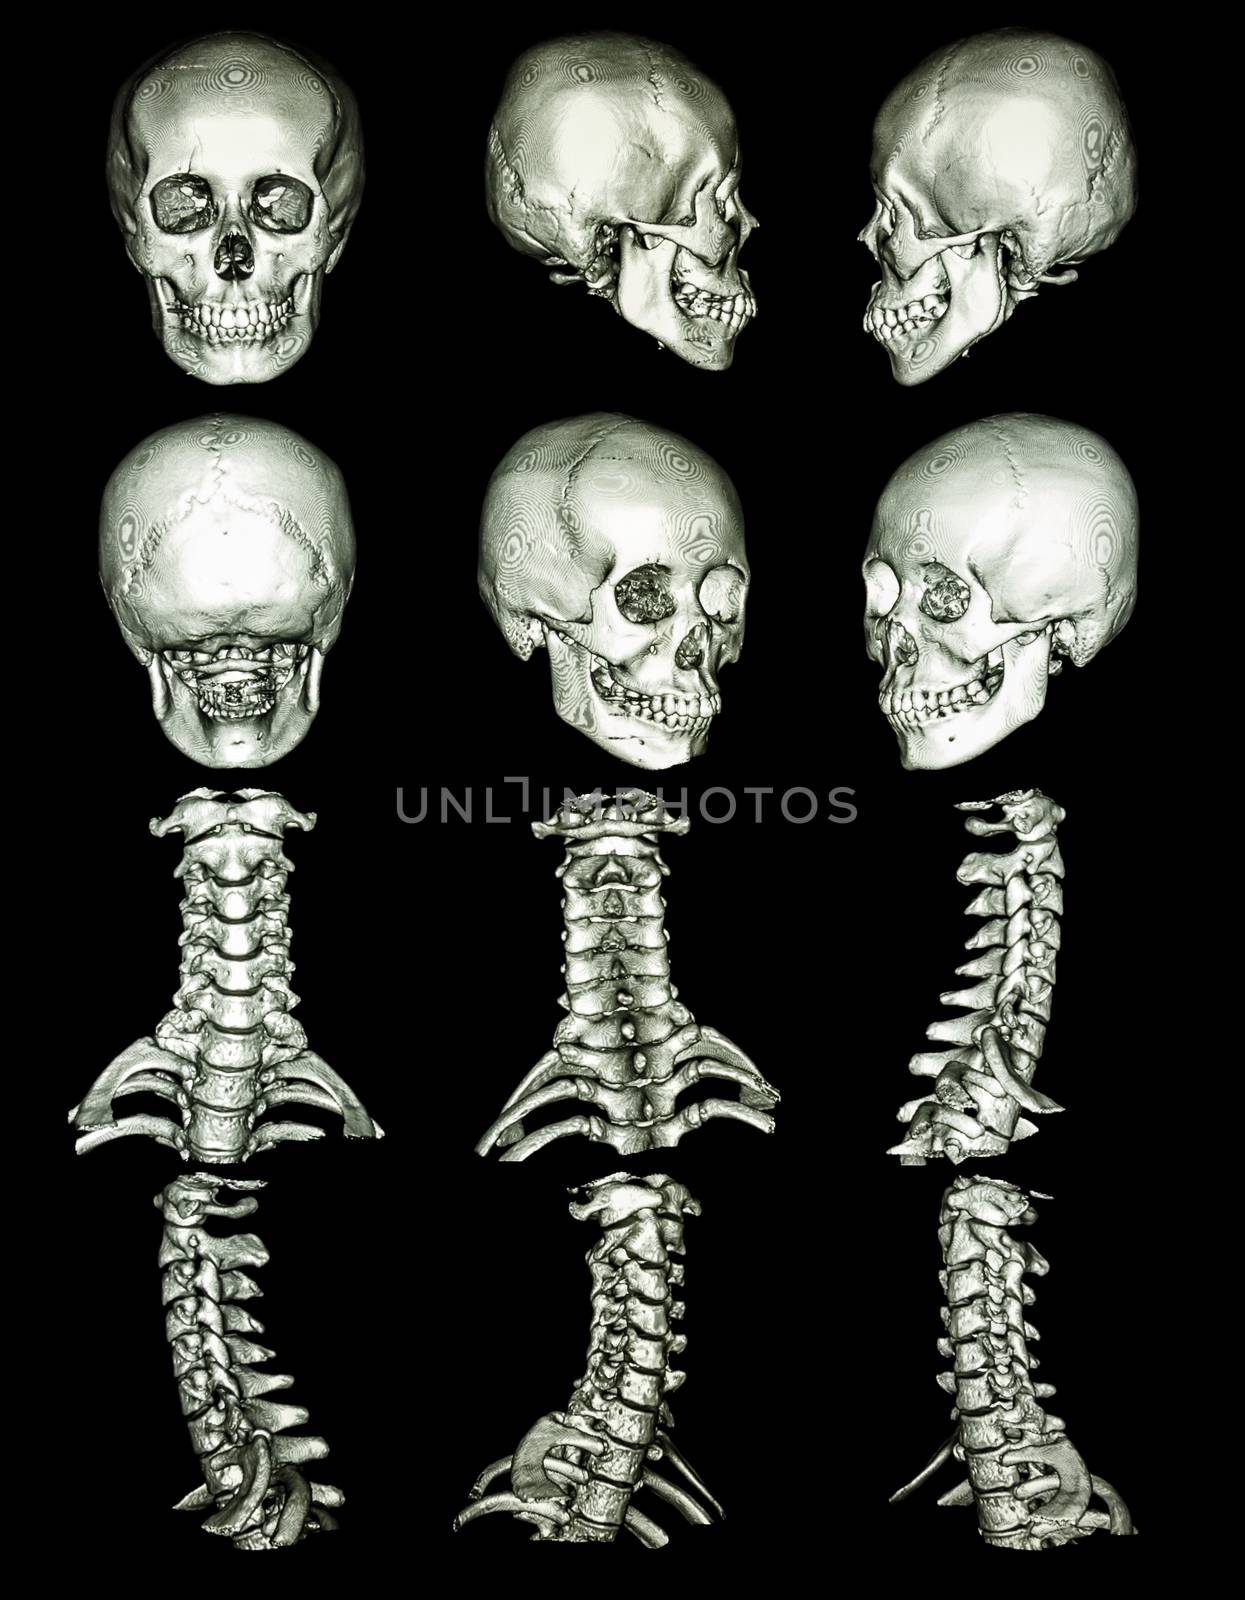 CT scan of skull by stockdevil